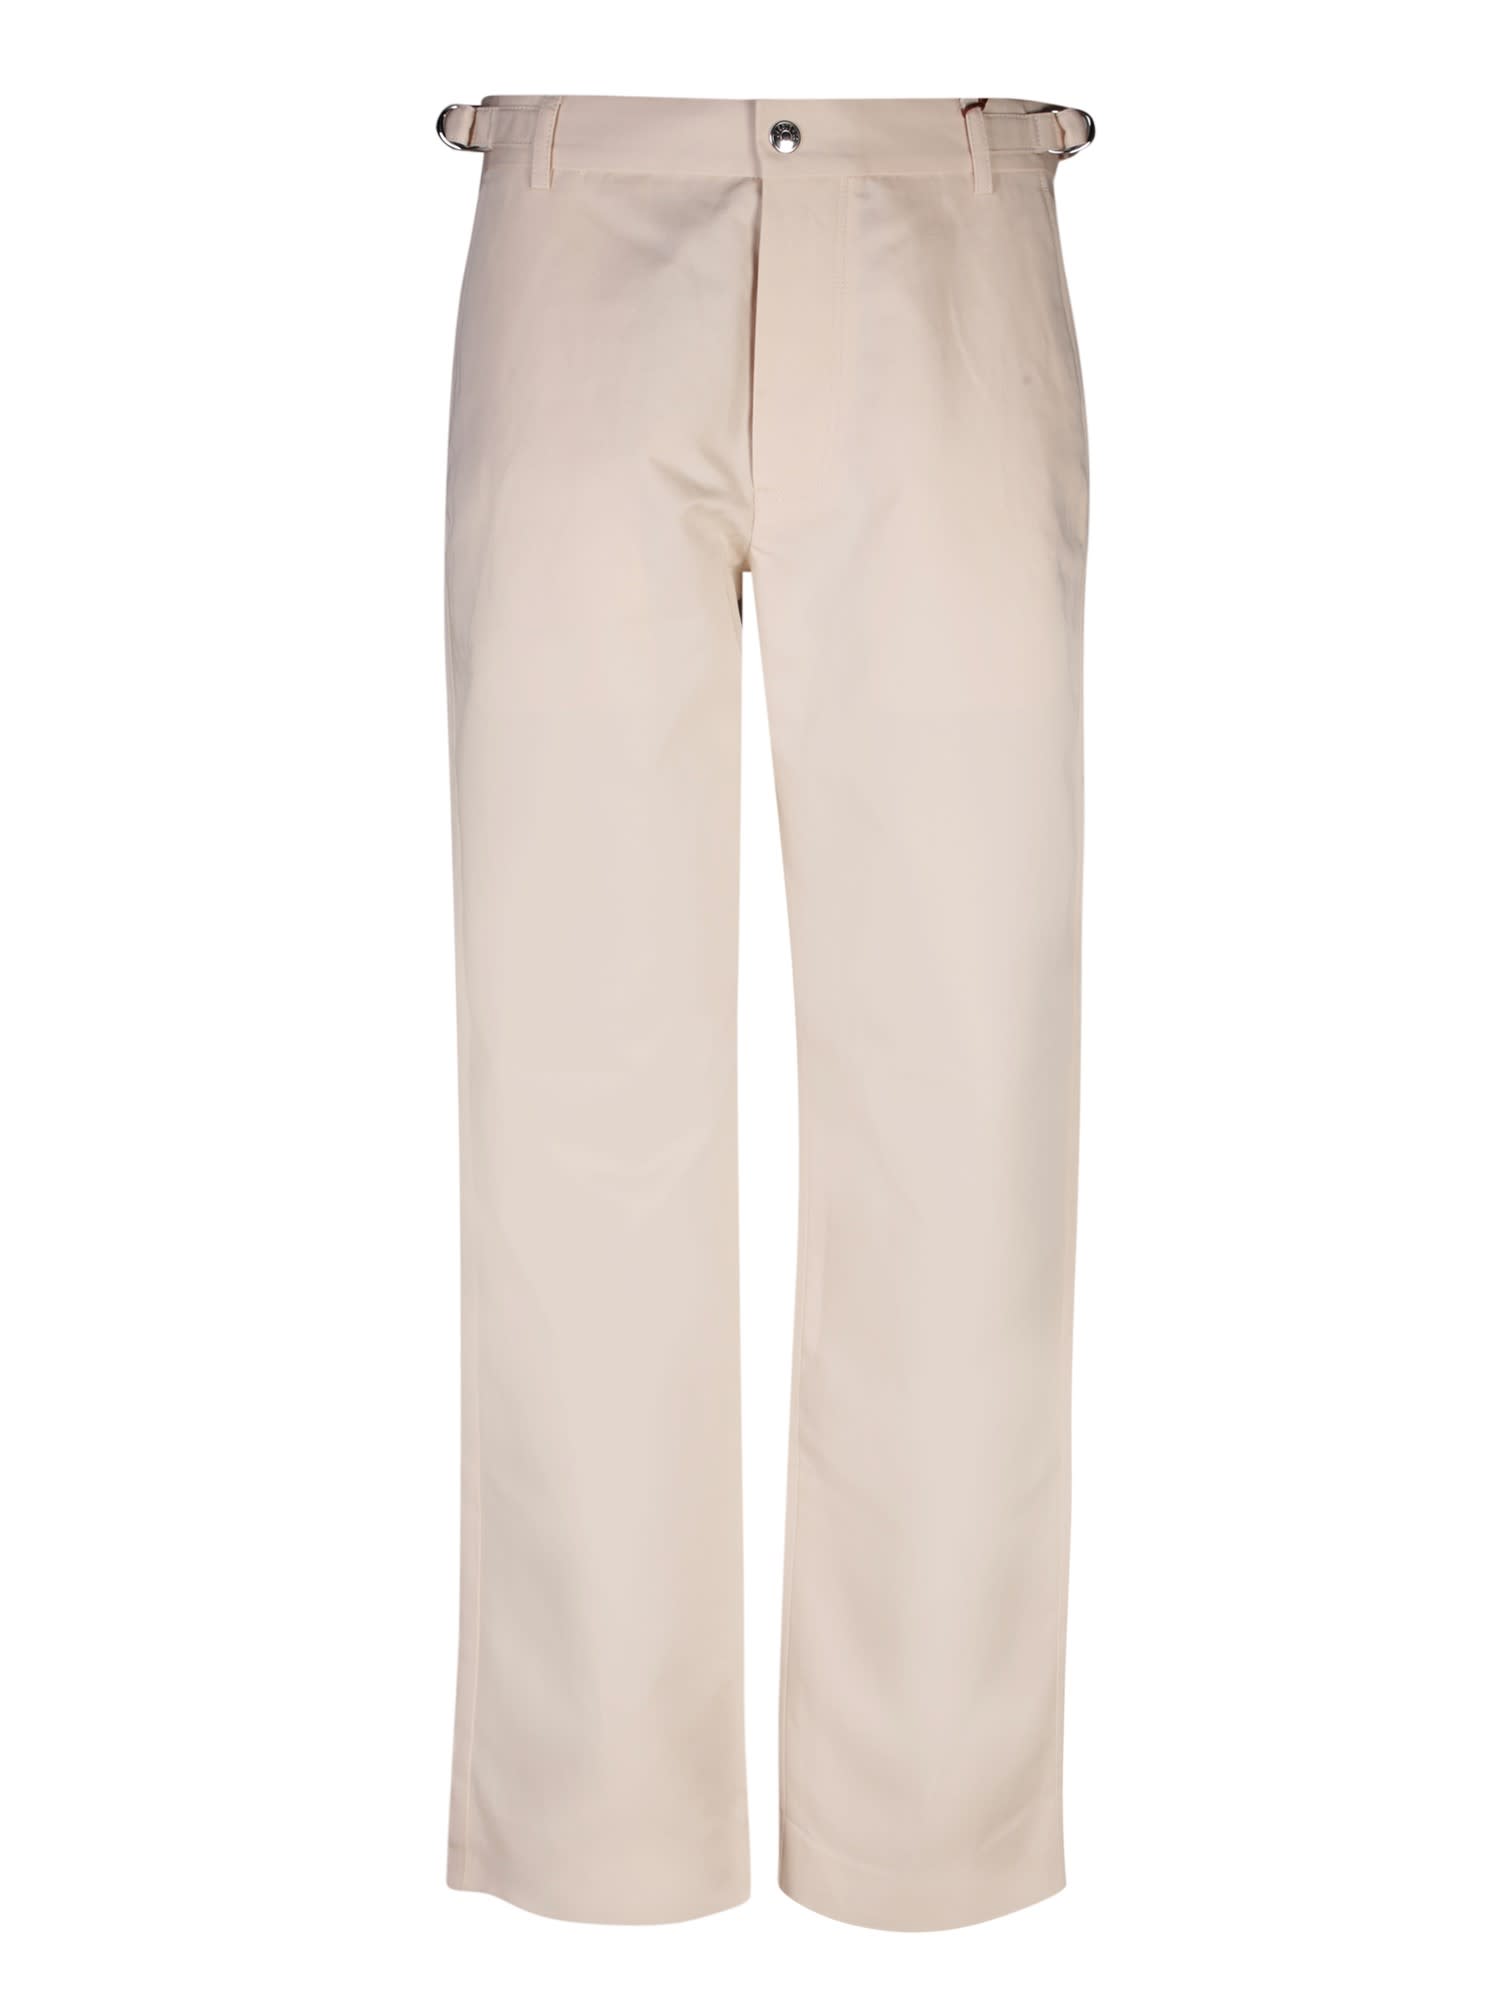 Jacquemus le Pantalon Jean Beige Loose Pants With A Button In Cotton And Linen Man